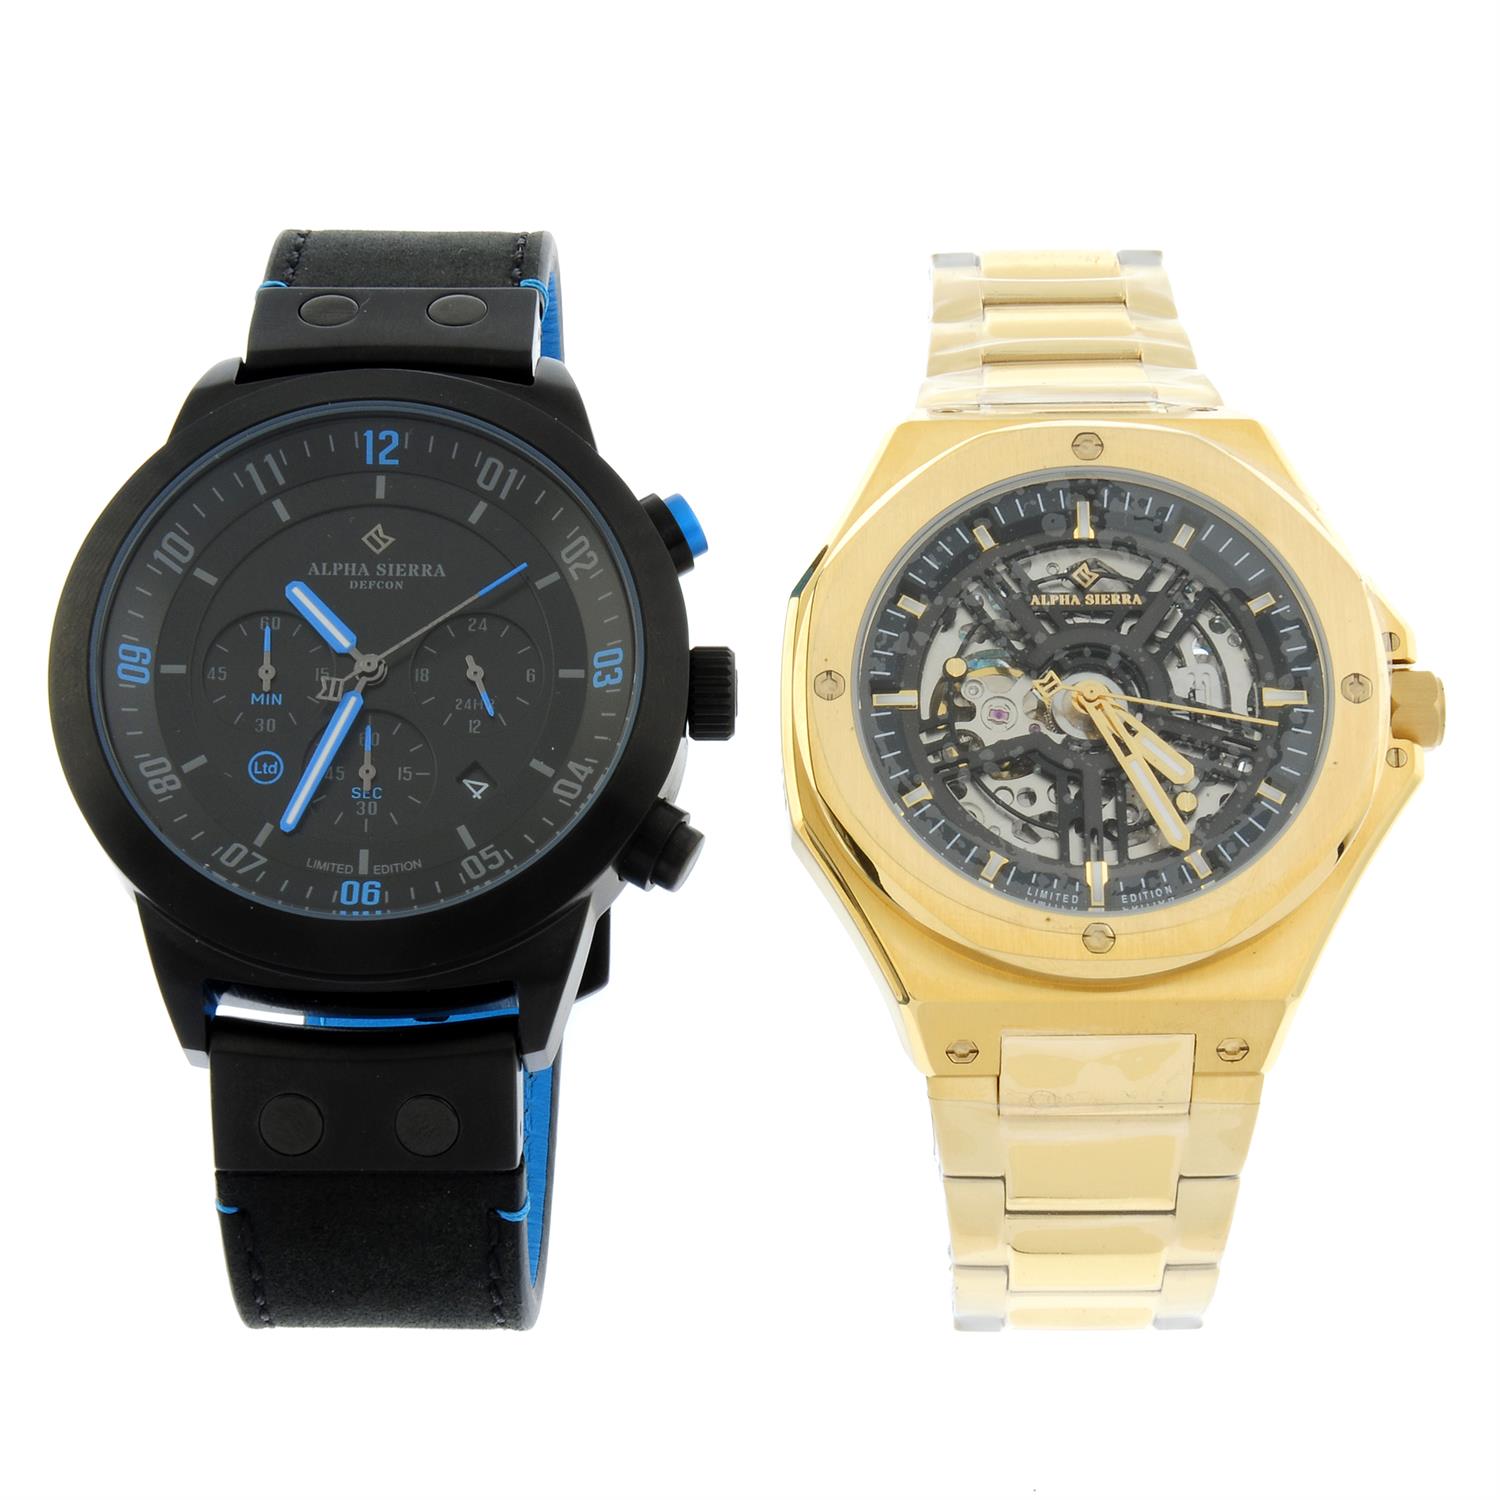 Alpha Sierra - a Defcon chronograph watch (46mm) with an Alpha Sierra Falcon watch